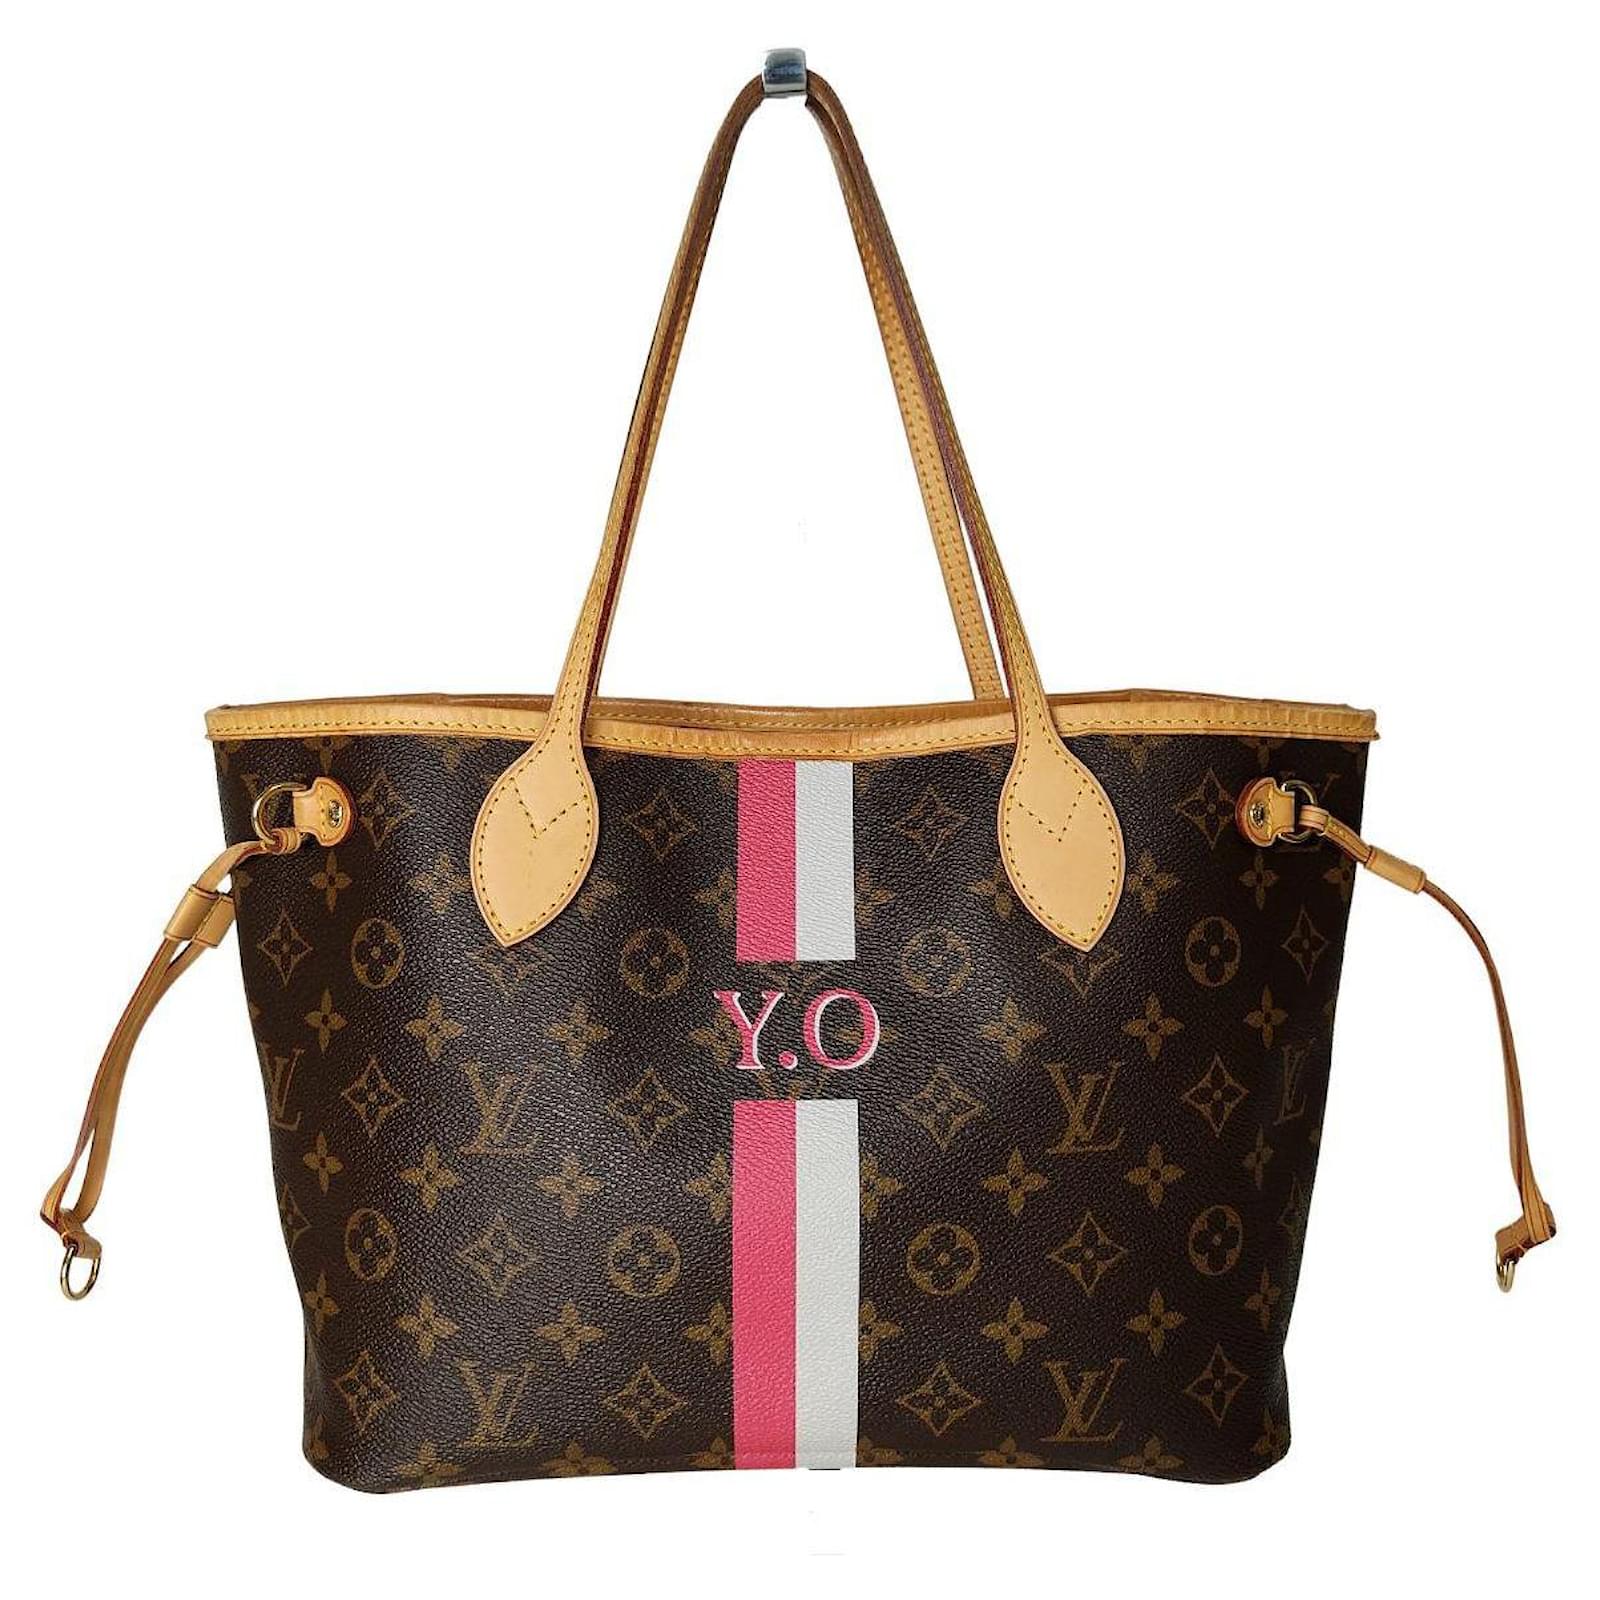 Like New Authentic Louis Vuitton Neverfull MM Fuchsia Monogram Tote Bag